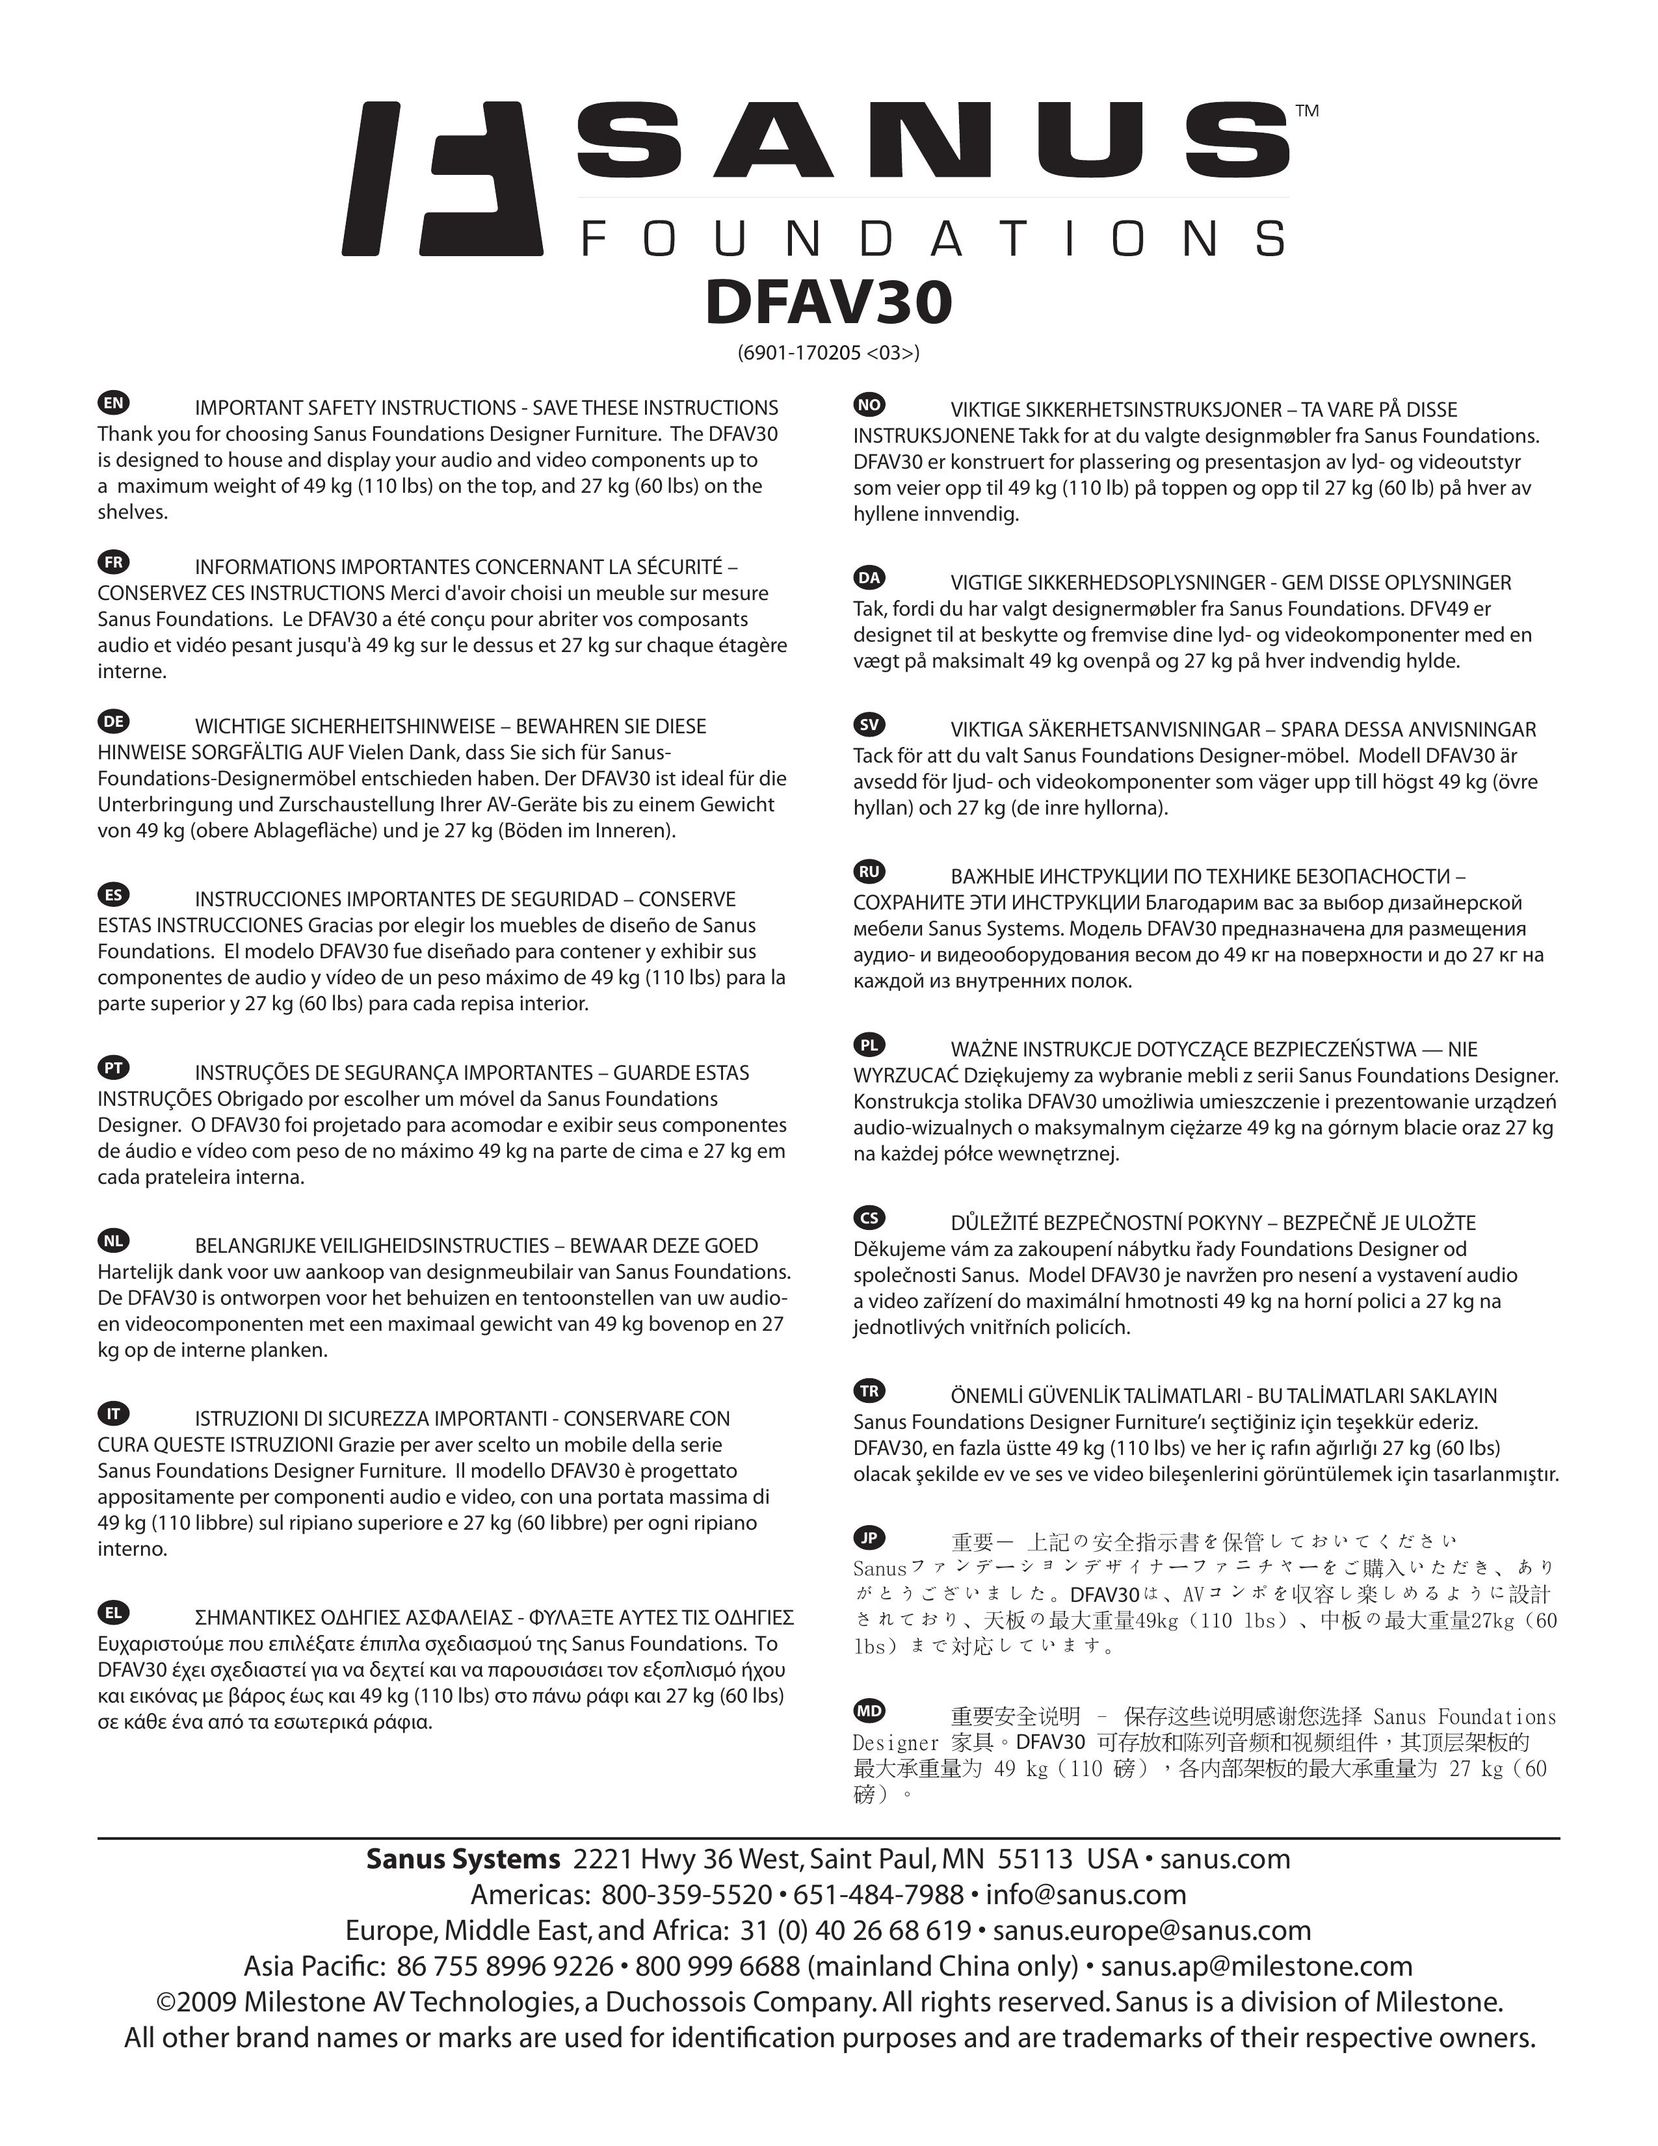 Sanus Systems DFAV30 Indoor Furnishings User Manual